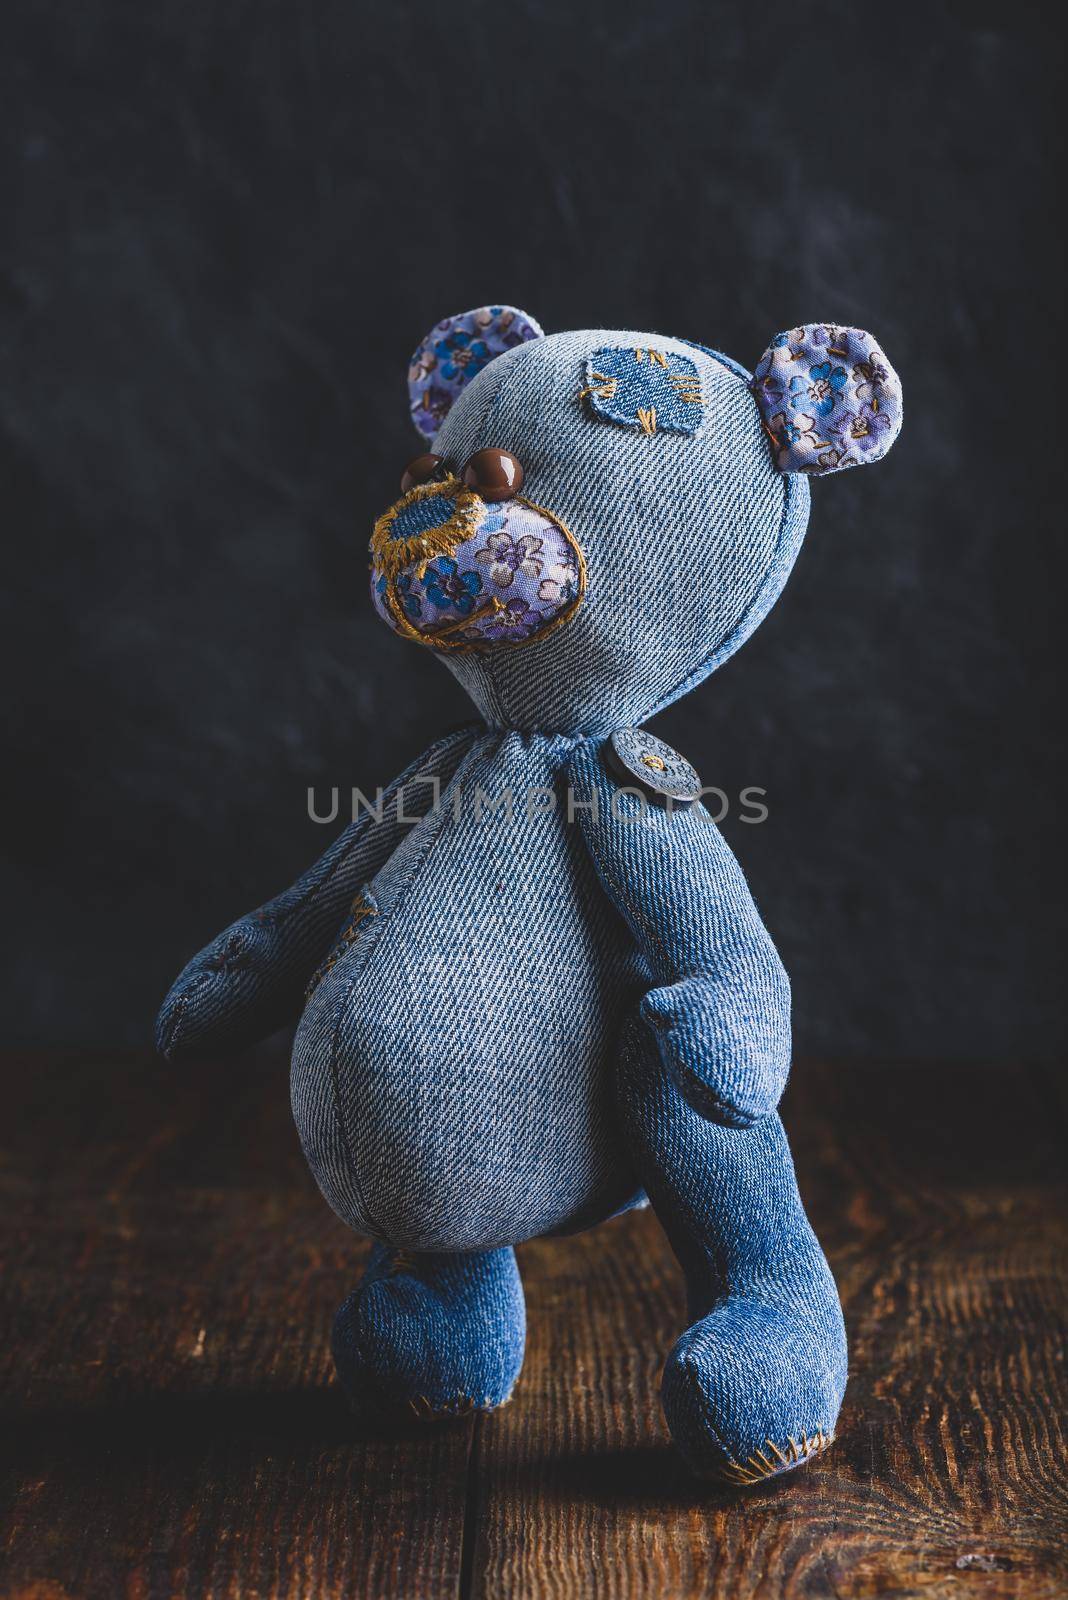 Jeans Bear Toy by Seva_blsv